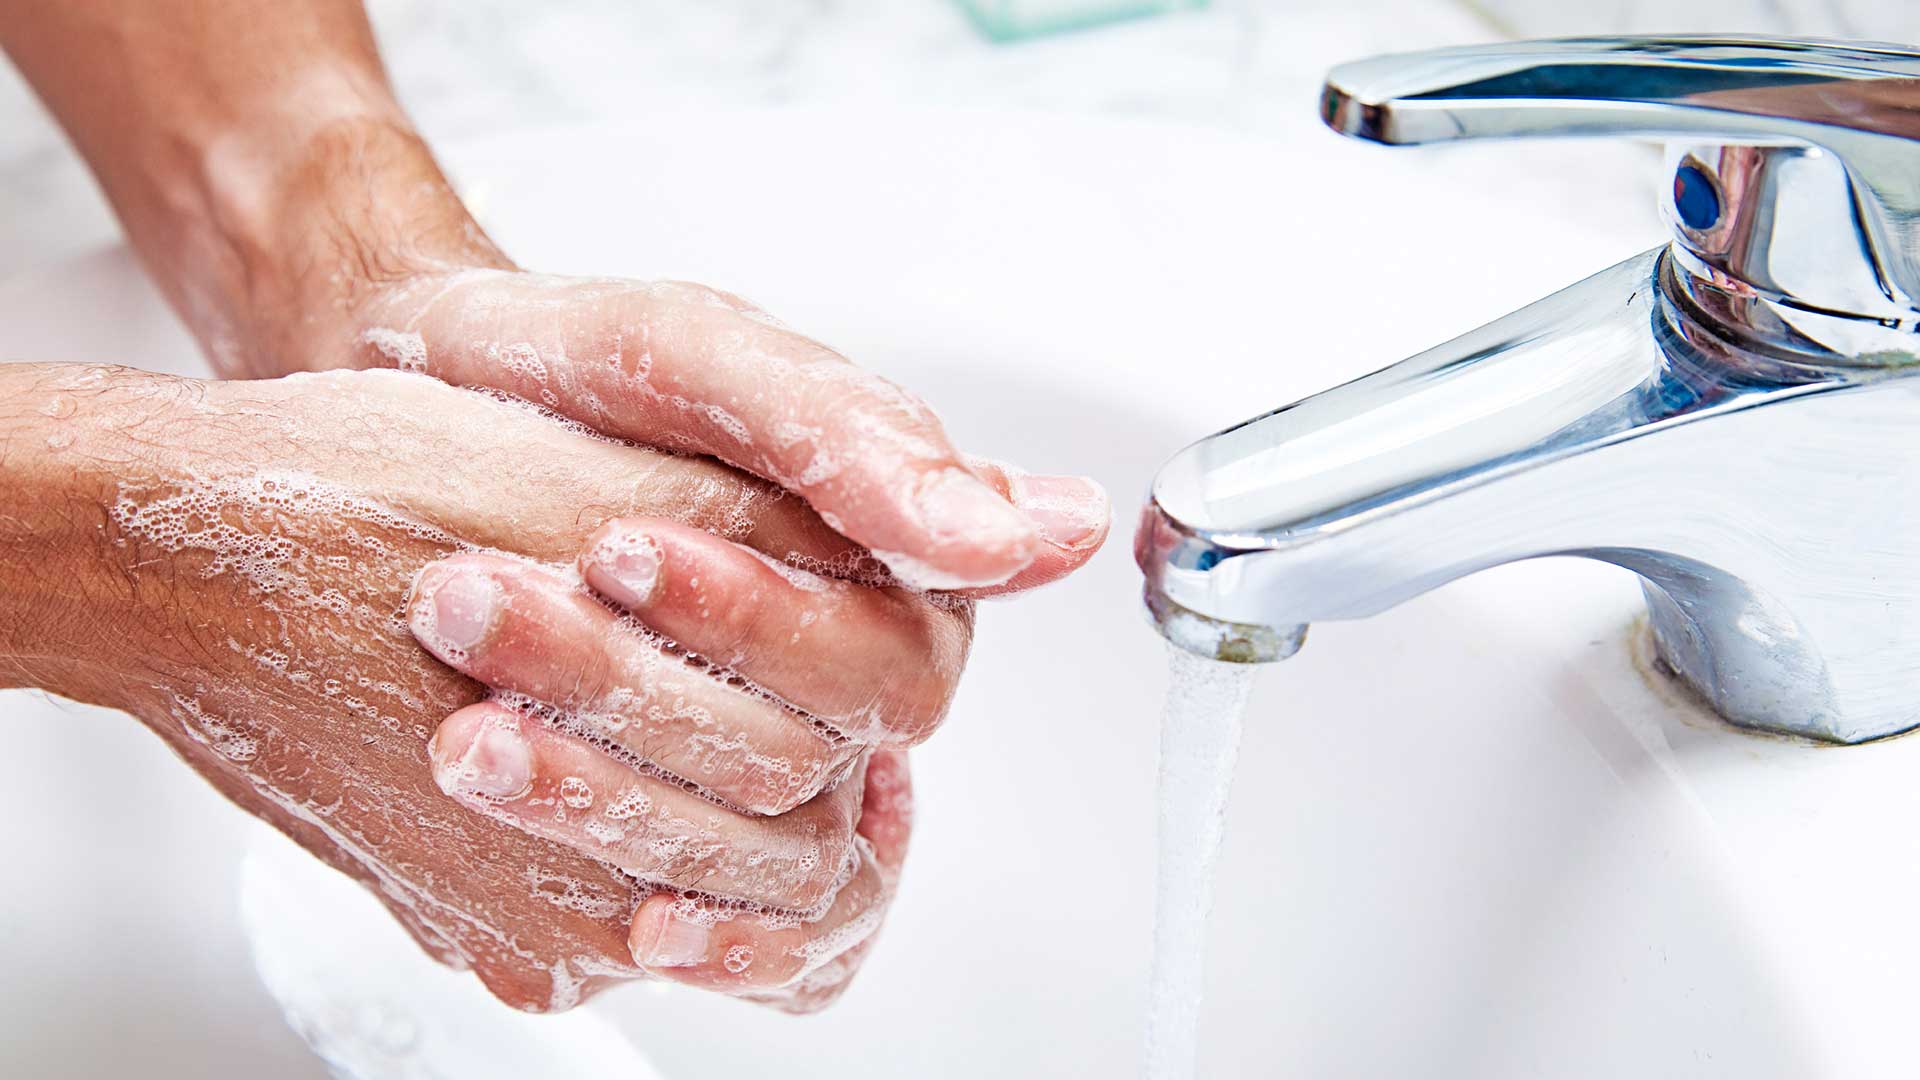 Washing hands.jpg